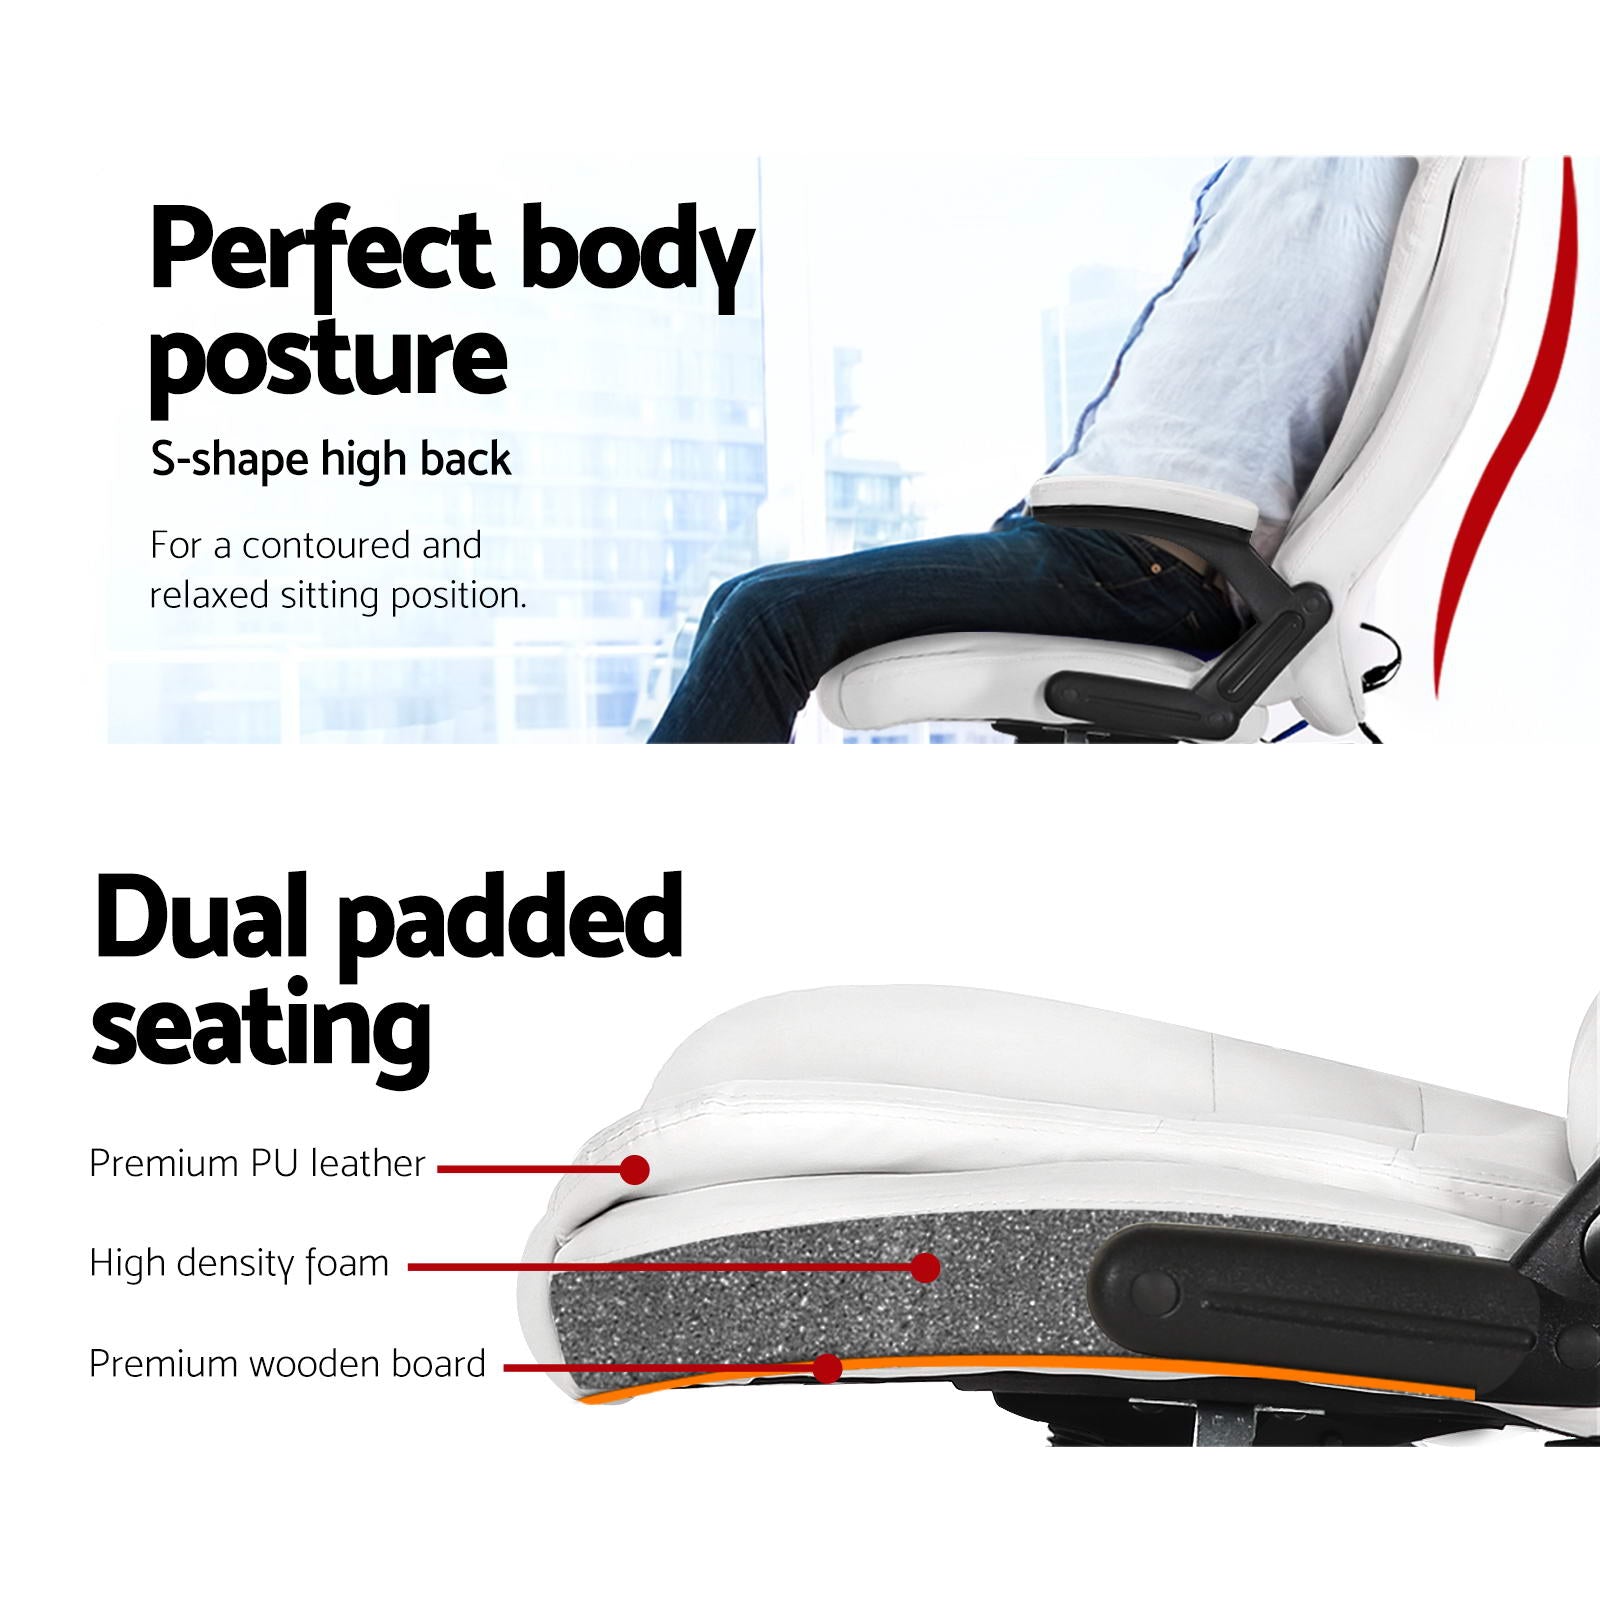 Artiss 8 Point Massage Office Chair Heated Seat Recliner PU White